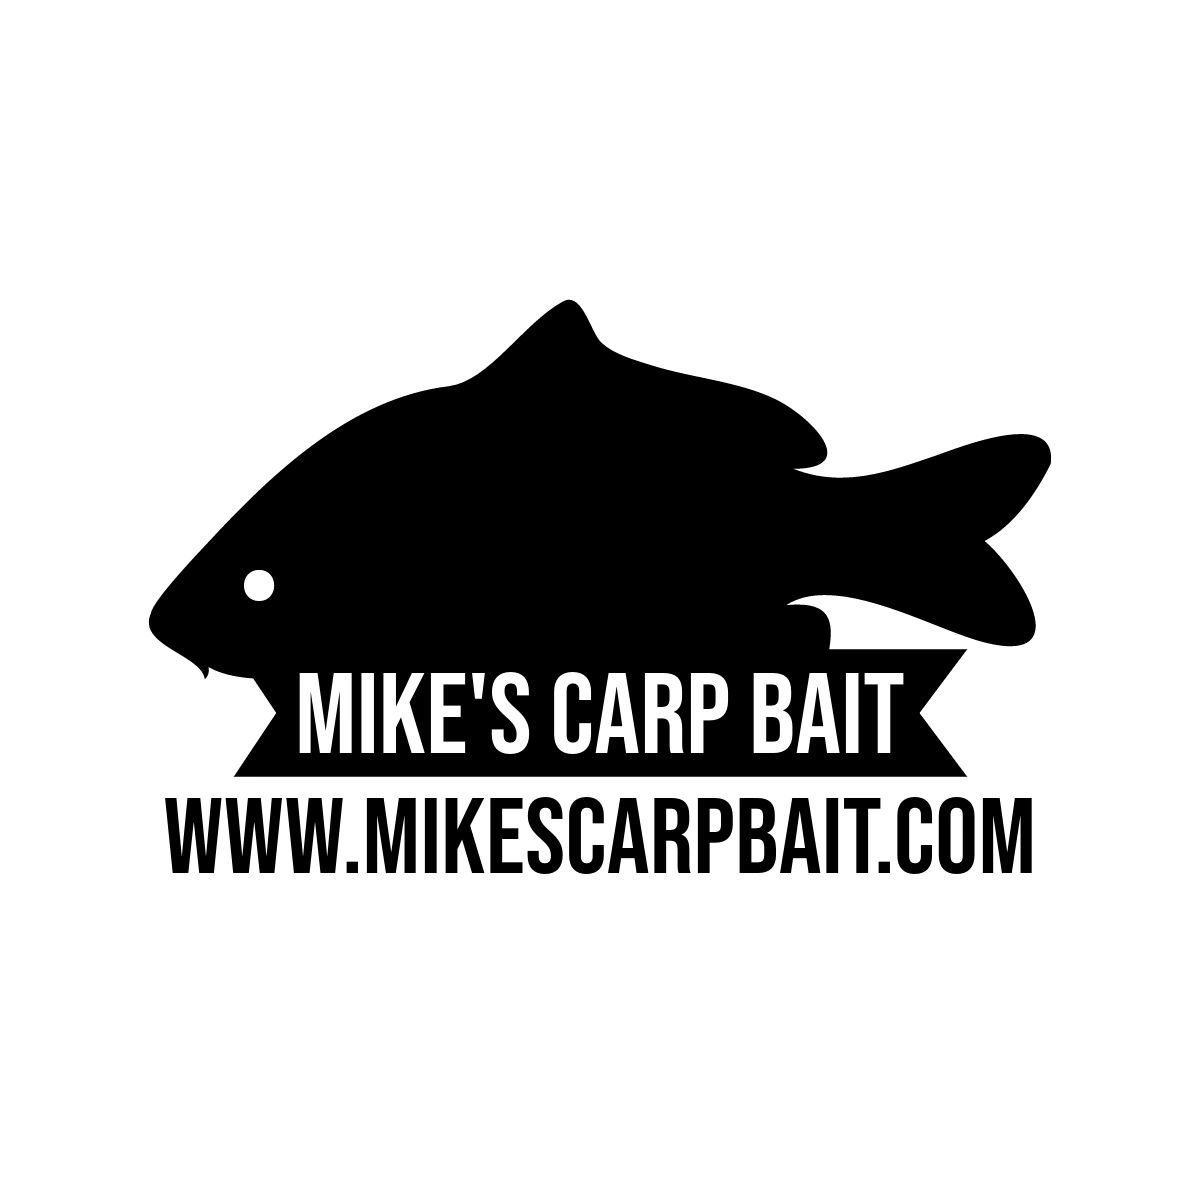 Mike's Carp Bait - Home